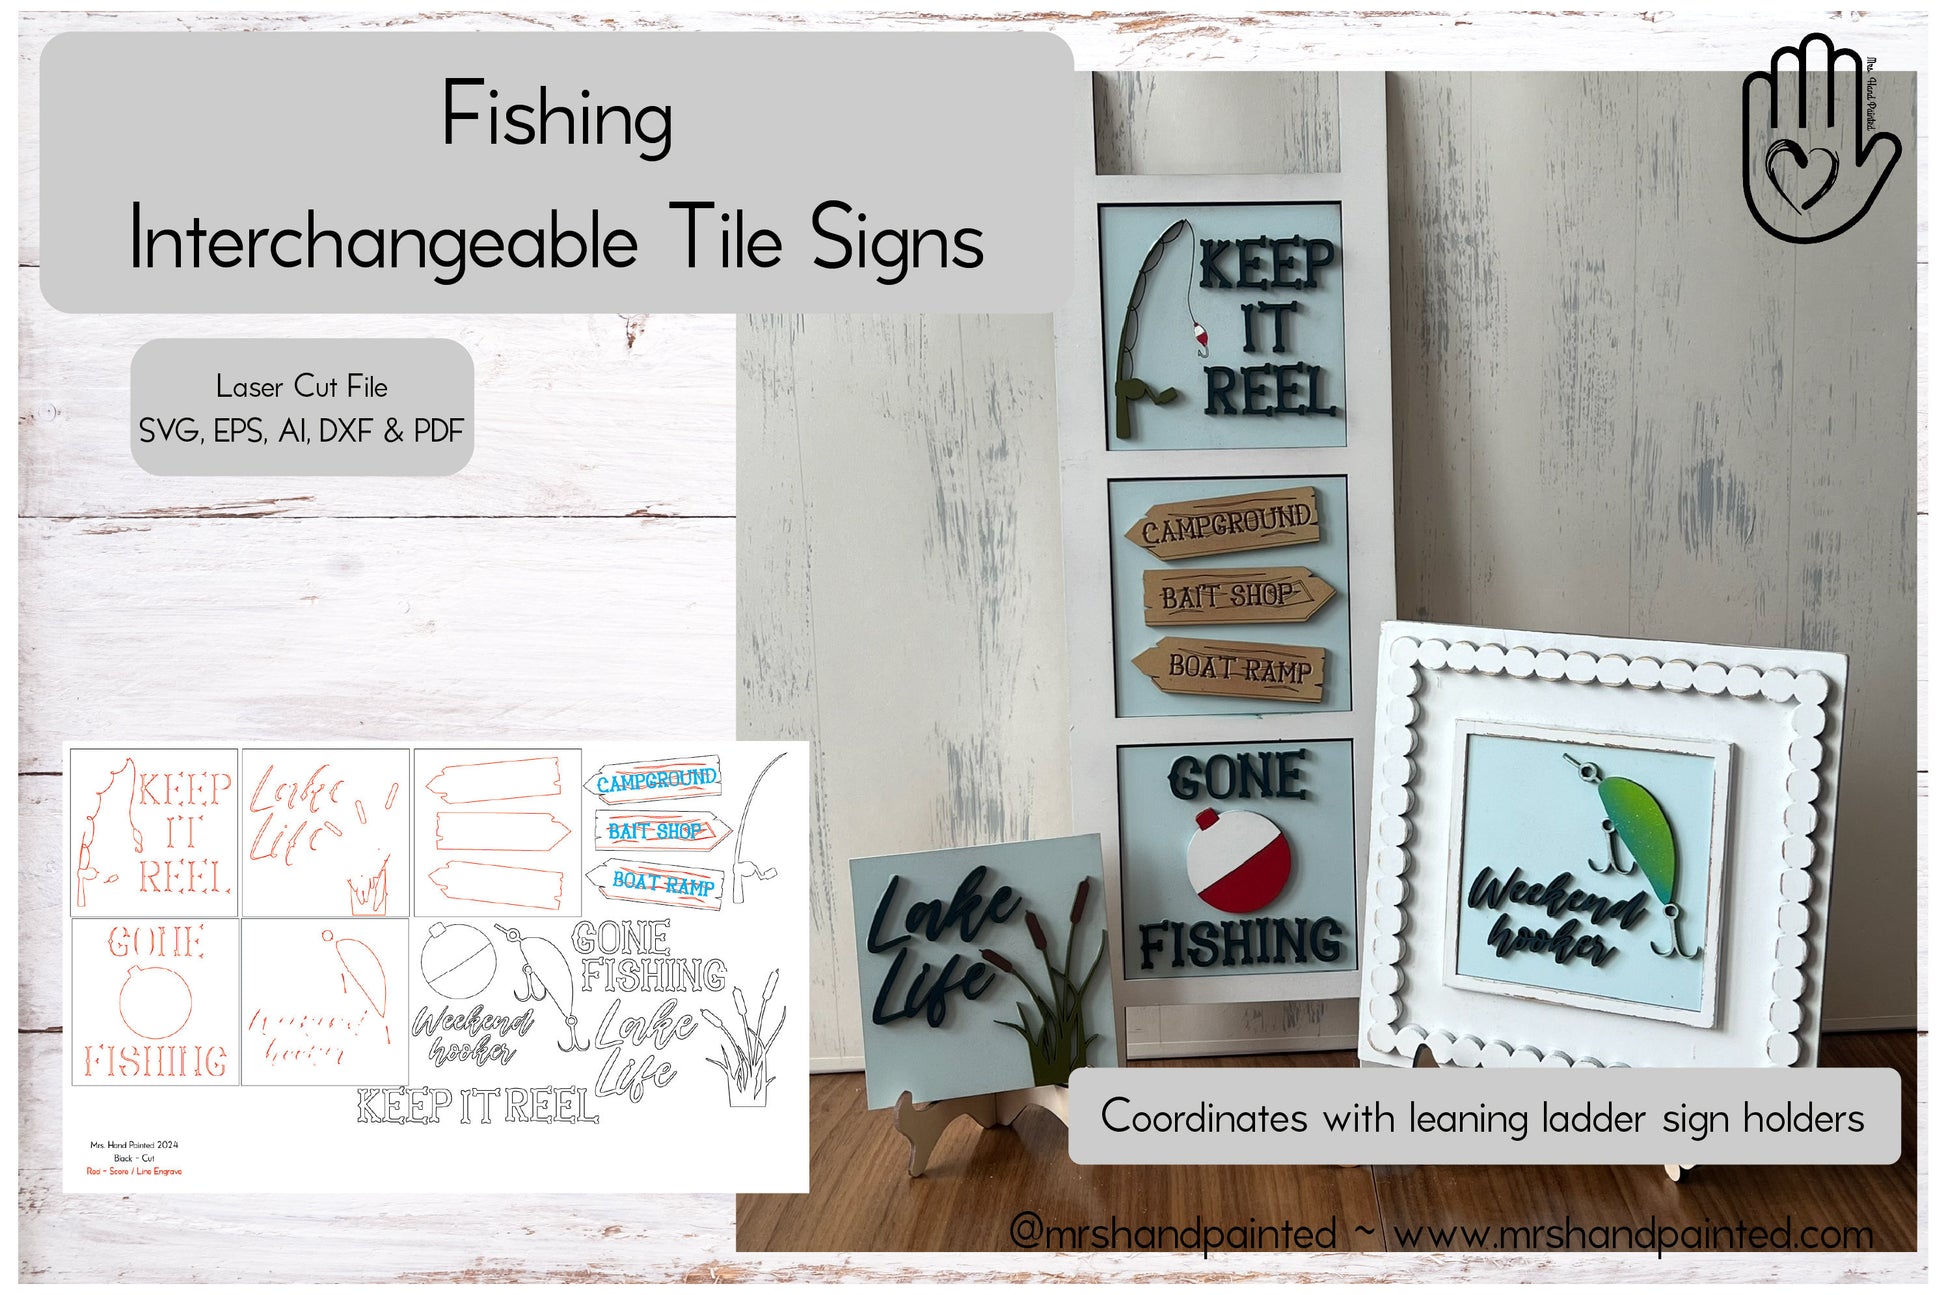 Digital Laser Cut File - Fishing Interchangeable Sign Tiles